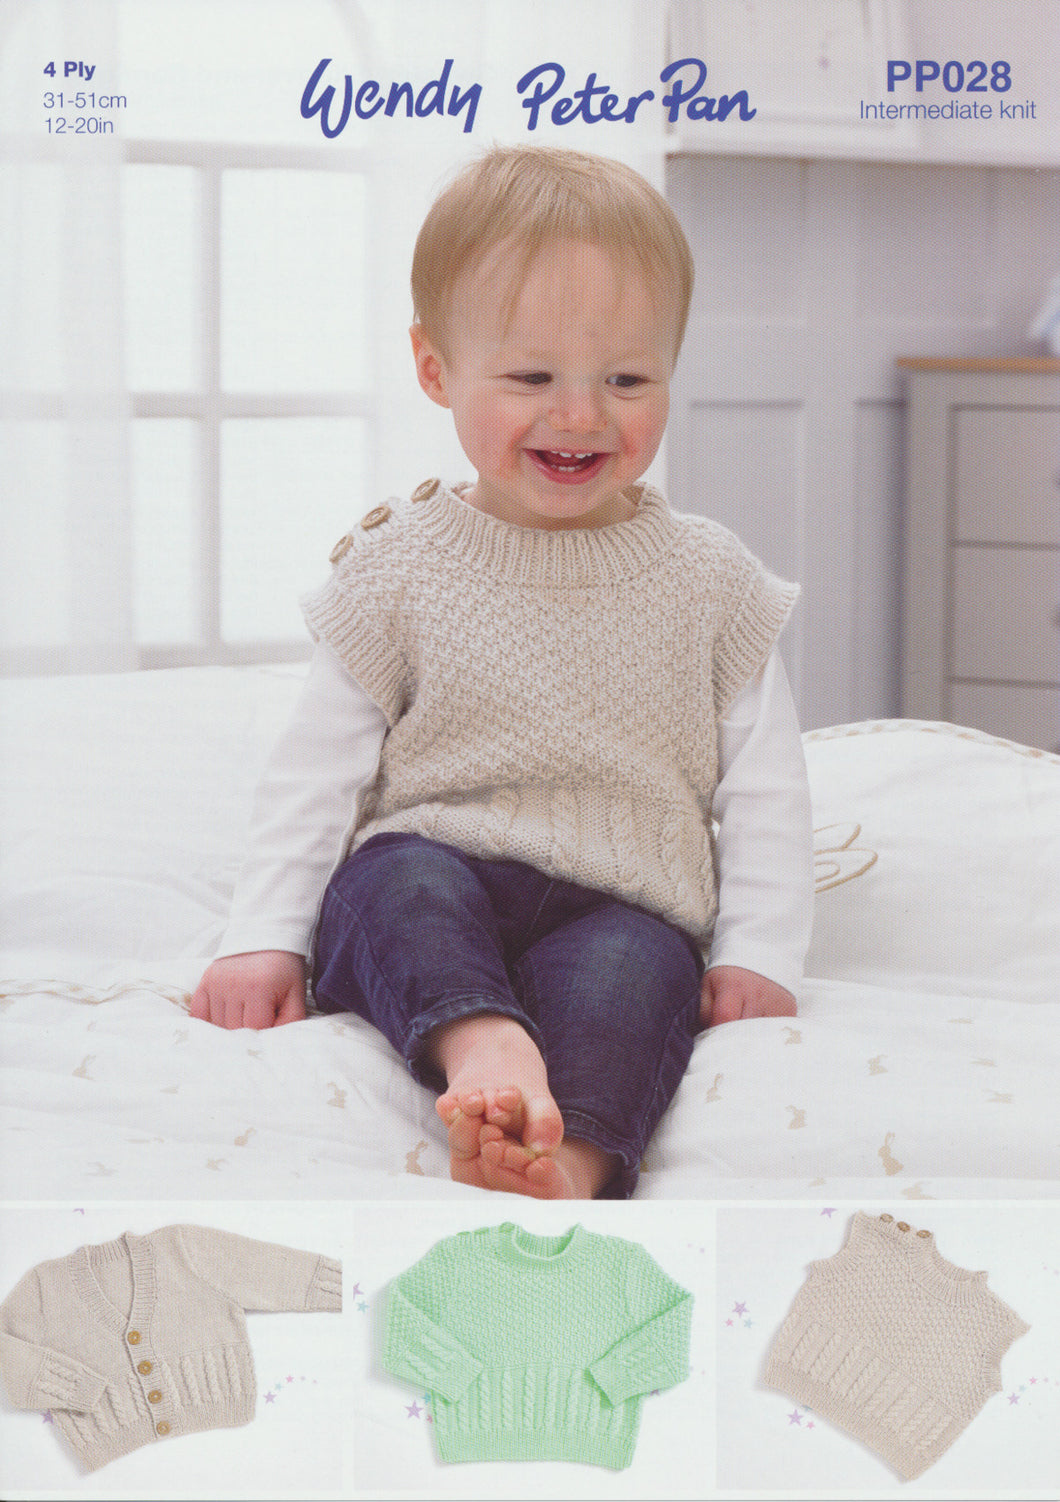 Wendy Peter Pan Baby 4ply Knitting Pattern - Sweater Slipover & Cardigan (PP028)